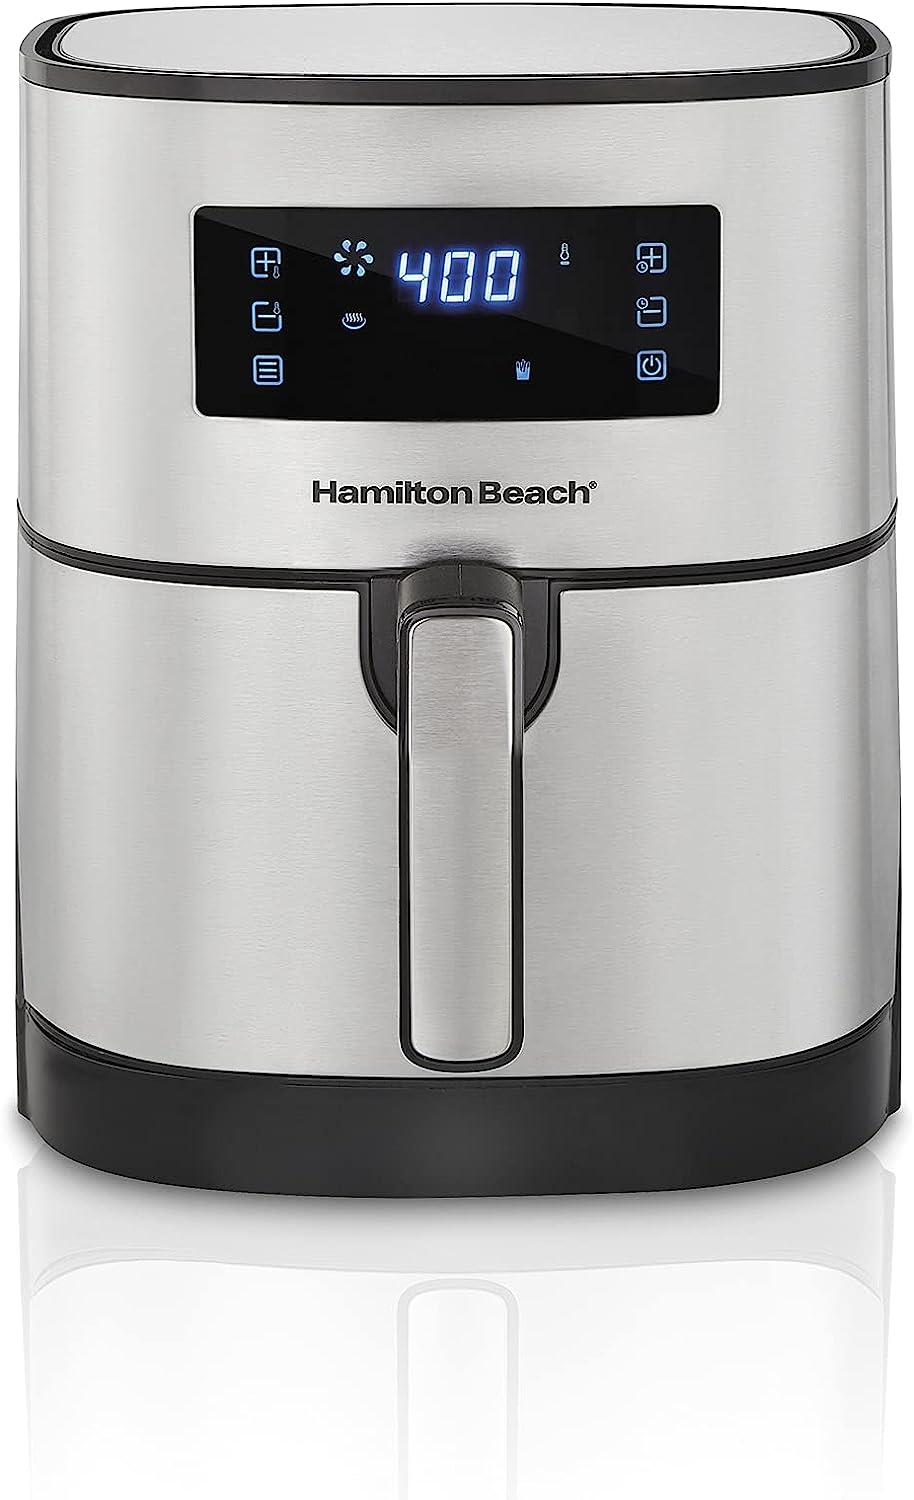 Hamilton Beach 5.8 Quart Digital Air Fryer Oven with 8 Presets